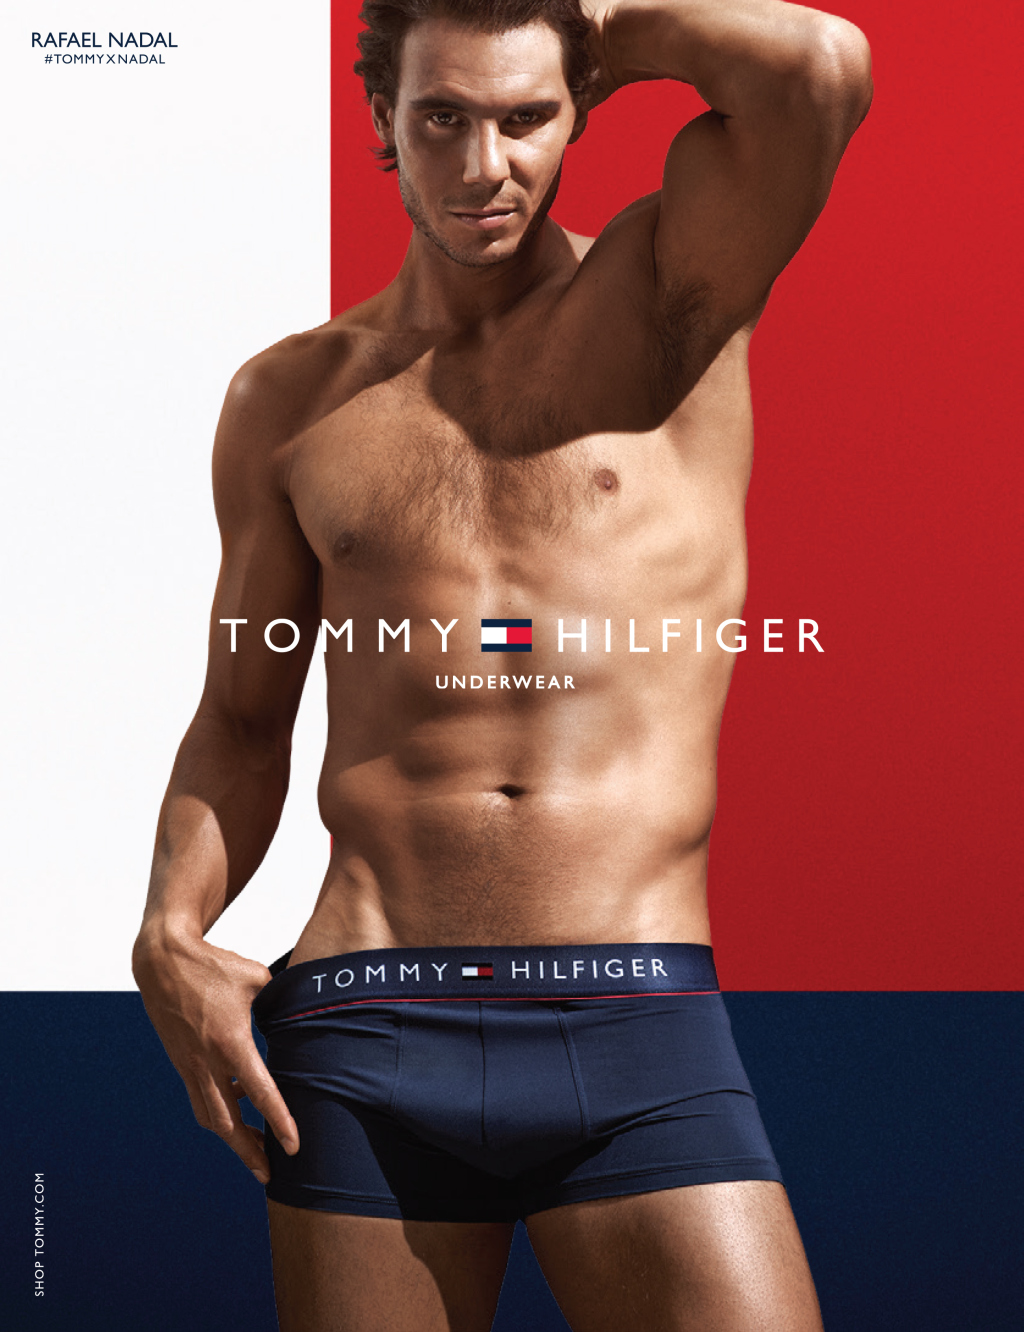 Rafael-Nadal-Tommy-Hilfiger-Underwear-2015-Campaign-Shoot-002